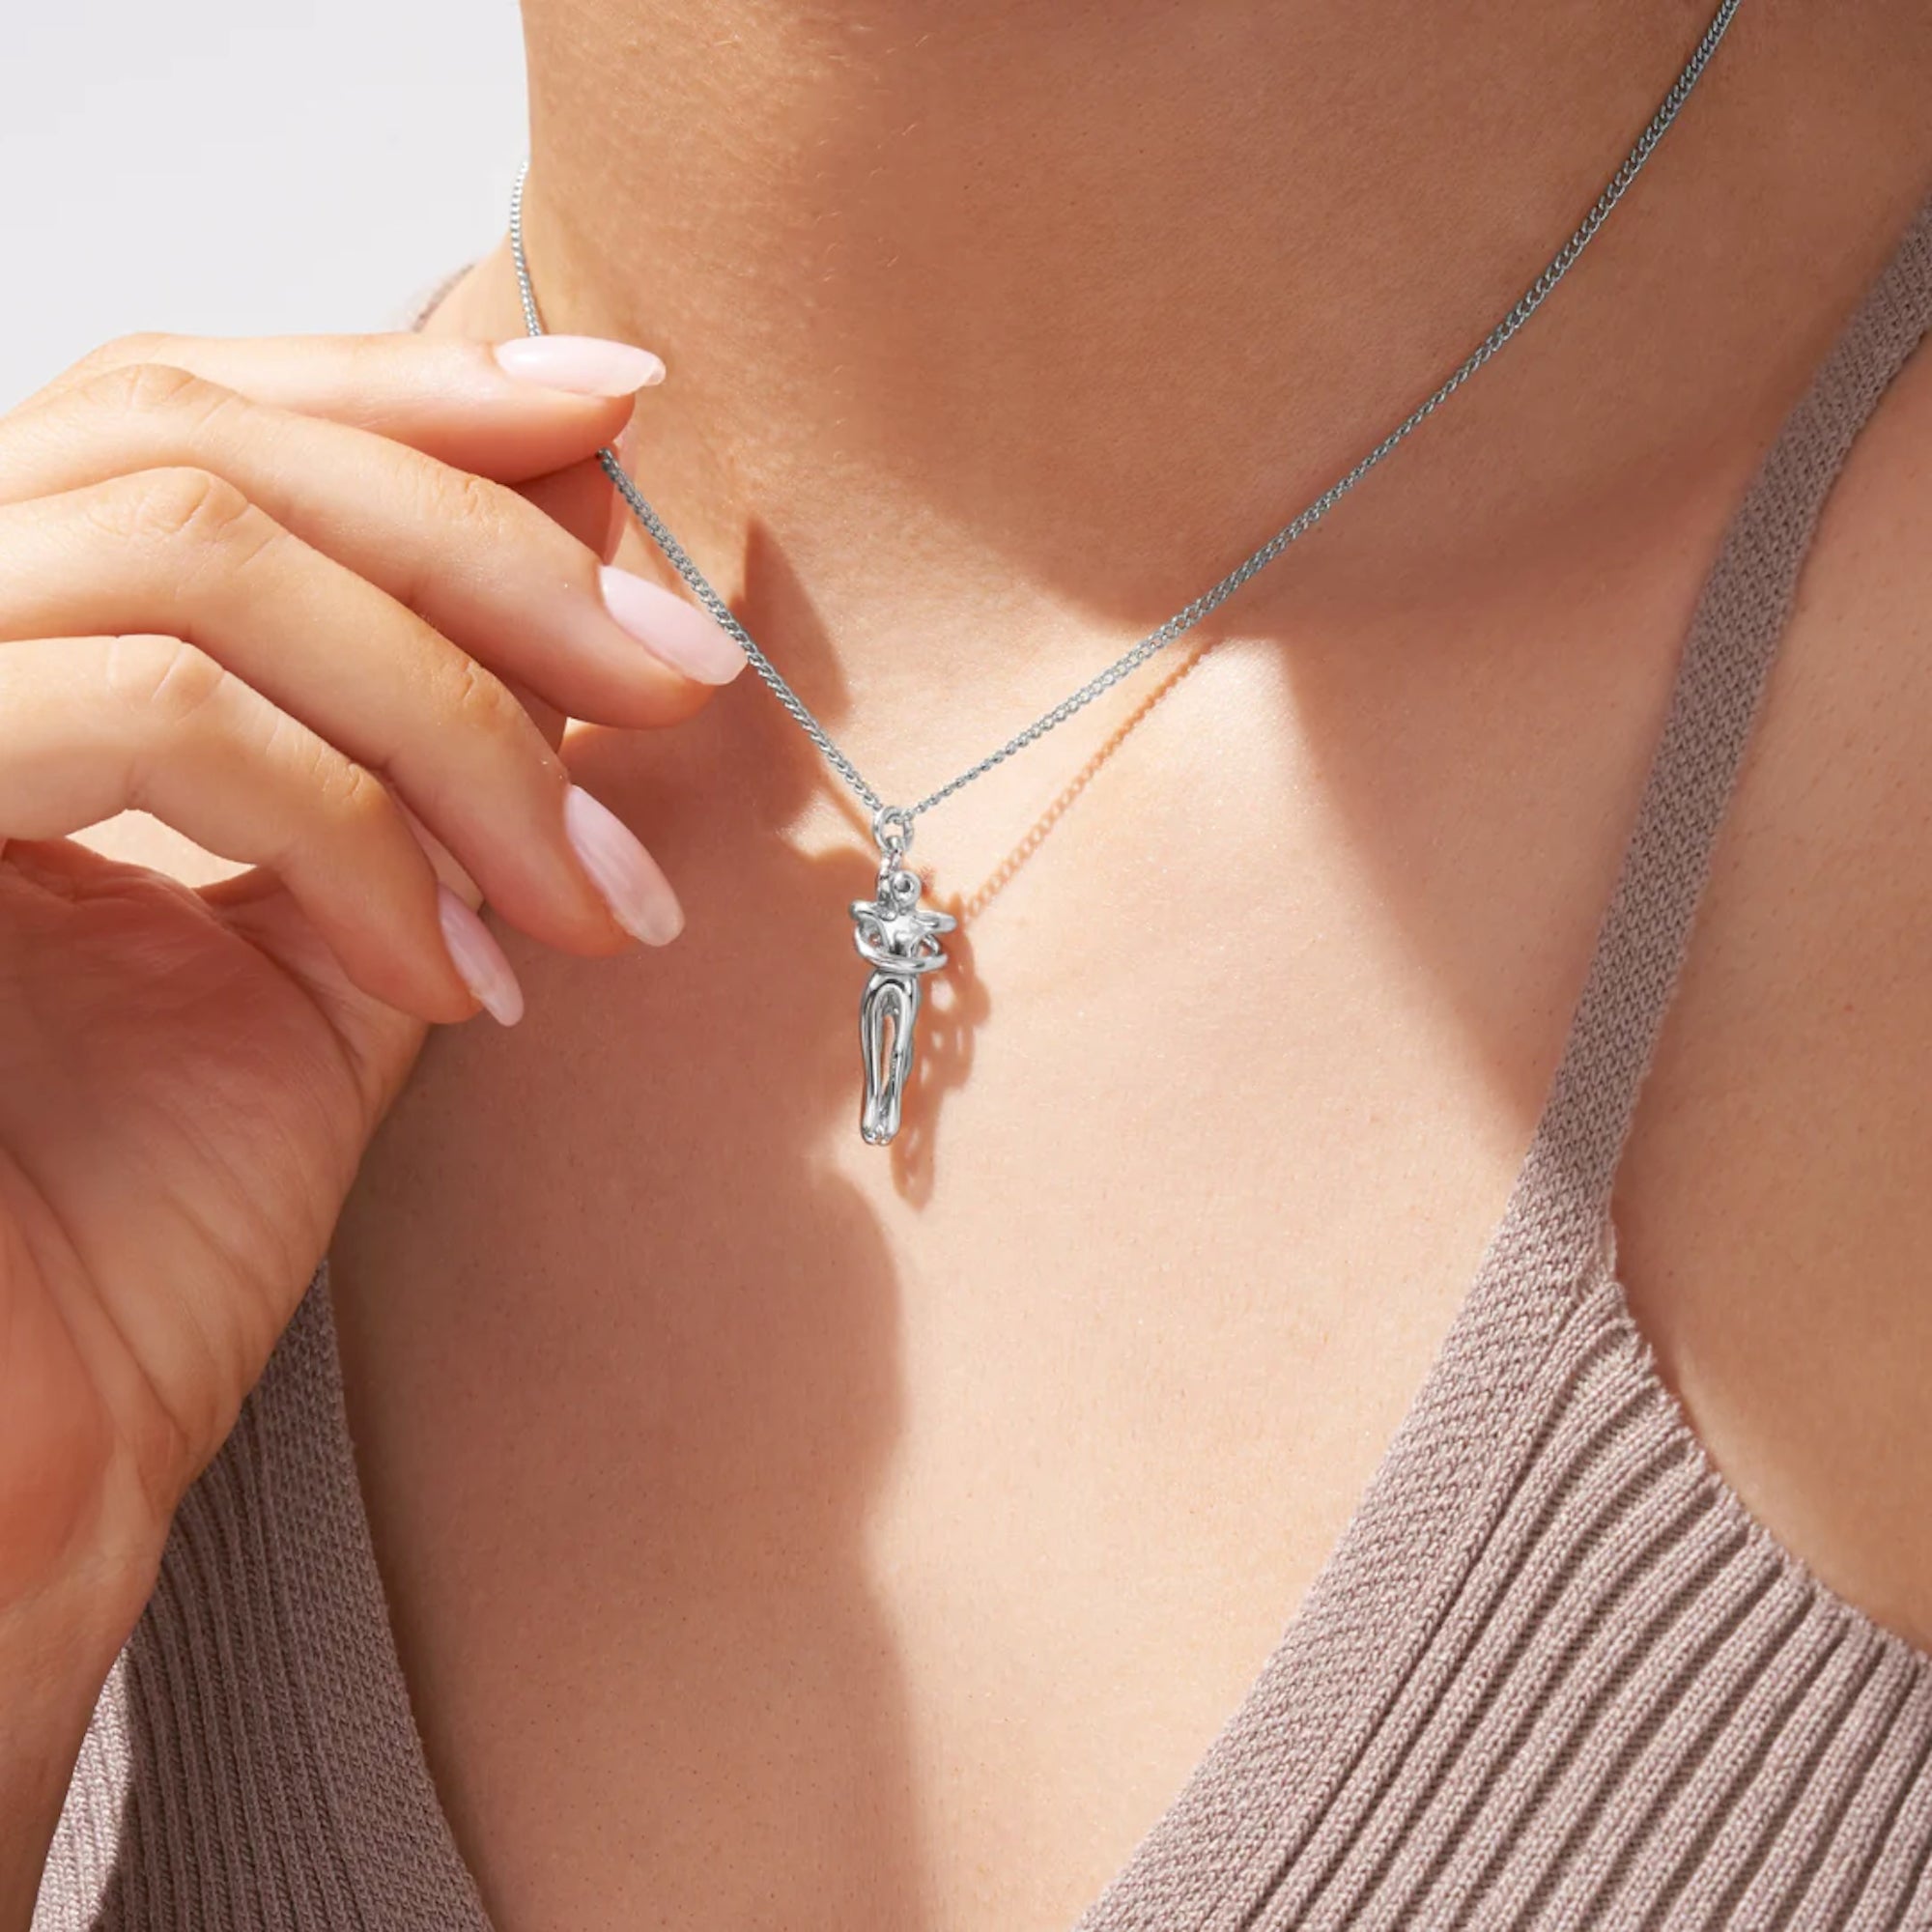 Buy online silver mohan mala necklace designs.